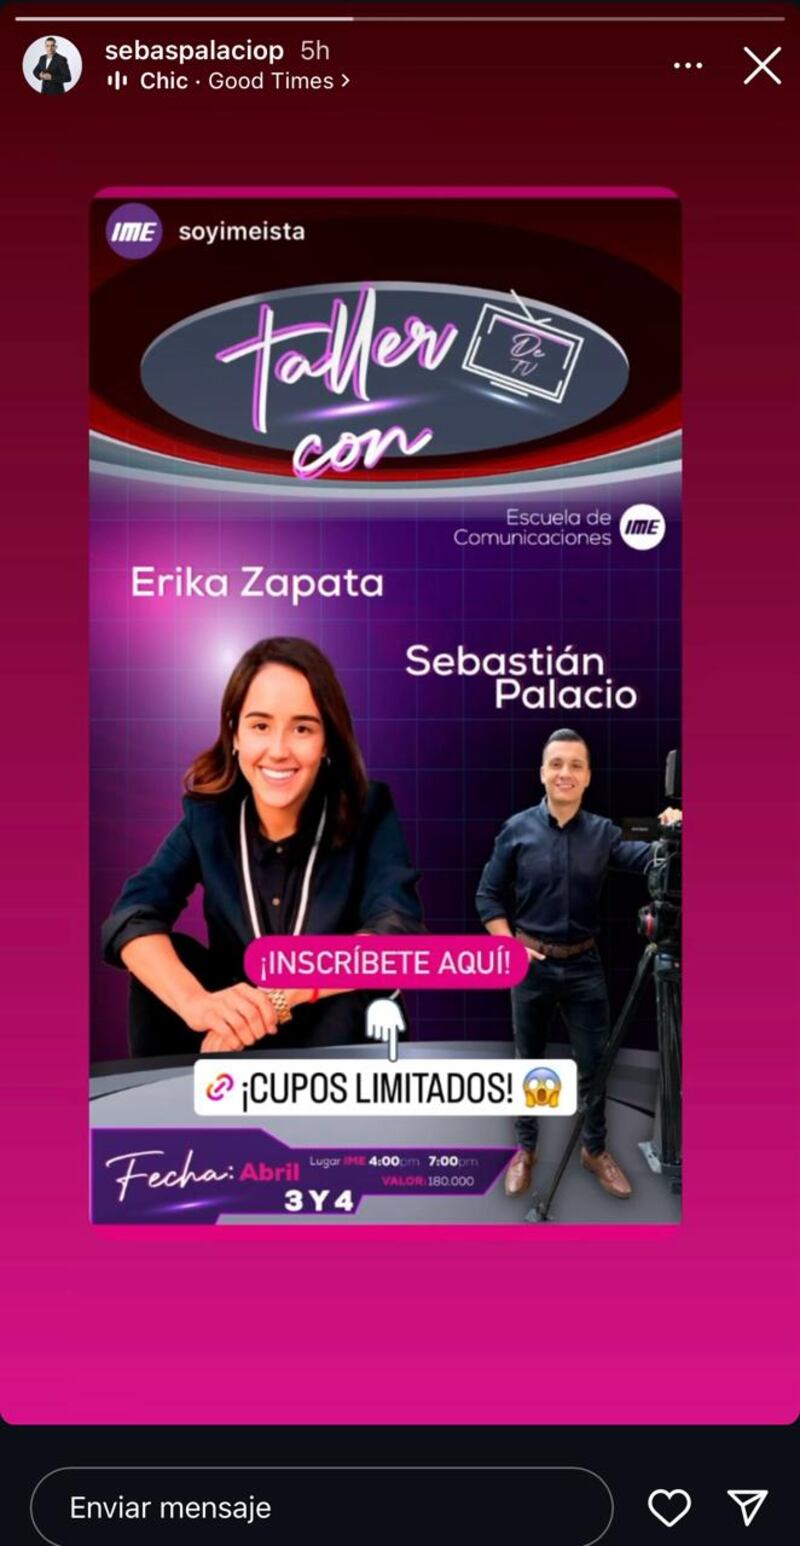 Erika Zapata y Sebastián Palacio de Noticias Caracol harán parte de un taller de periodismo.